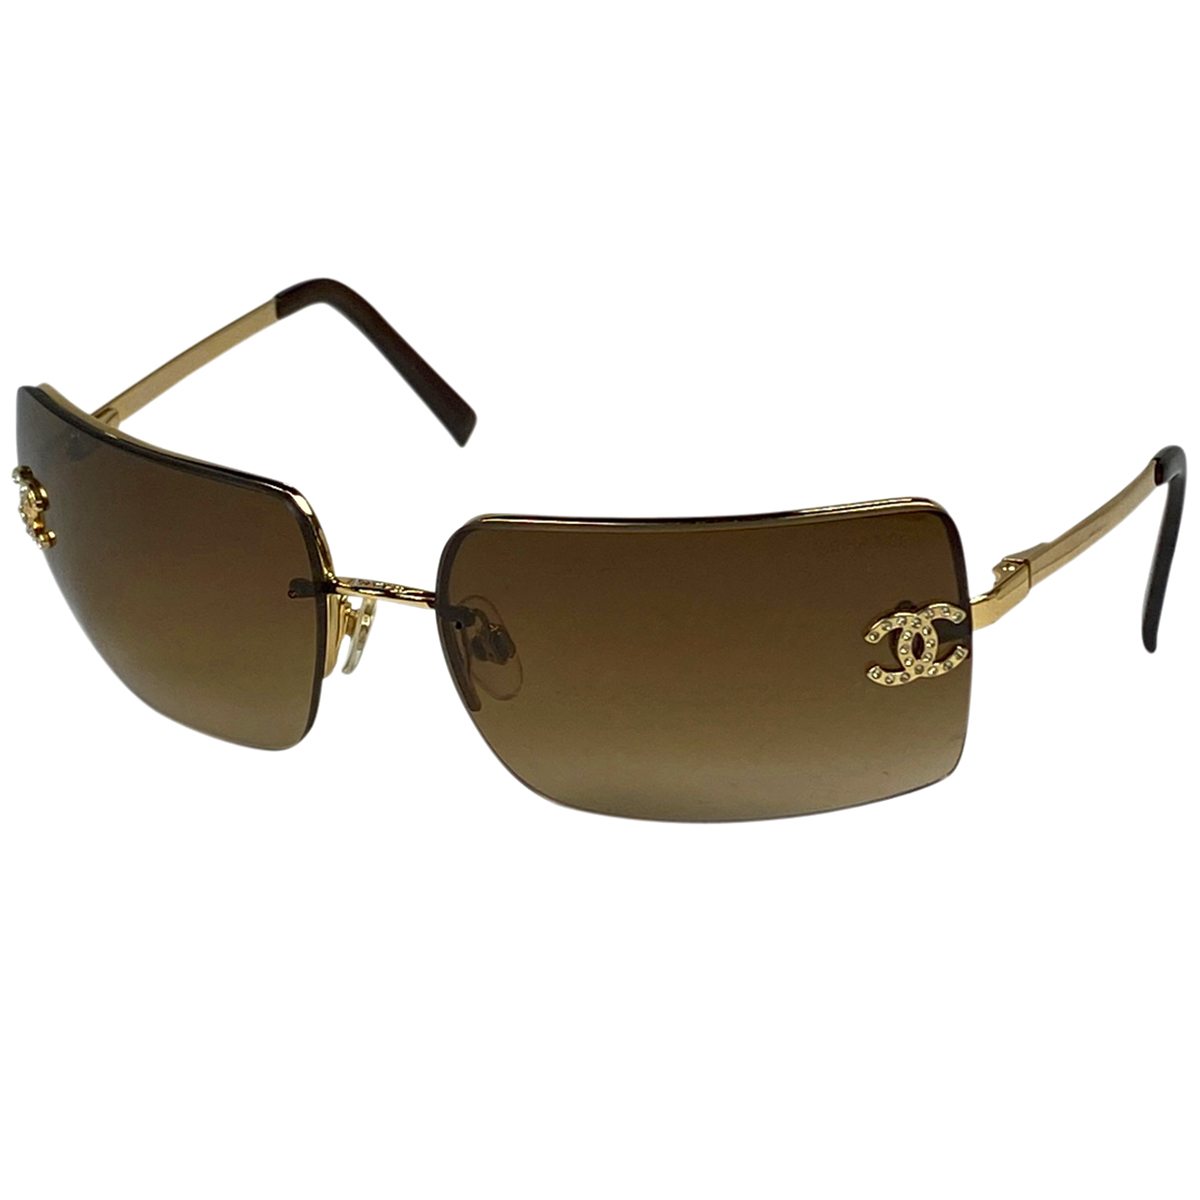  Chanel CHANEL here Mark sunglasses half rim rhinestone sunglasses metal Brown 4092B lady's [ used ]